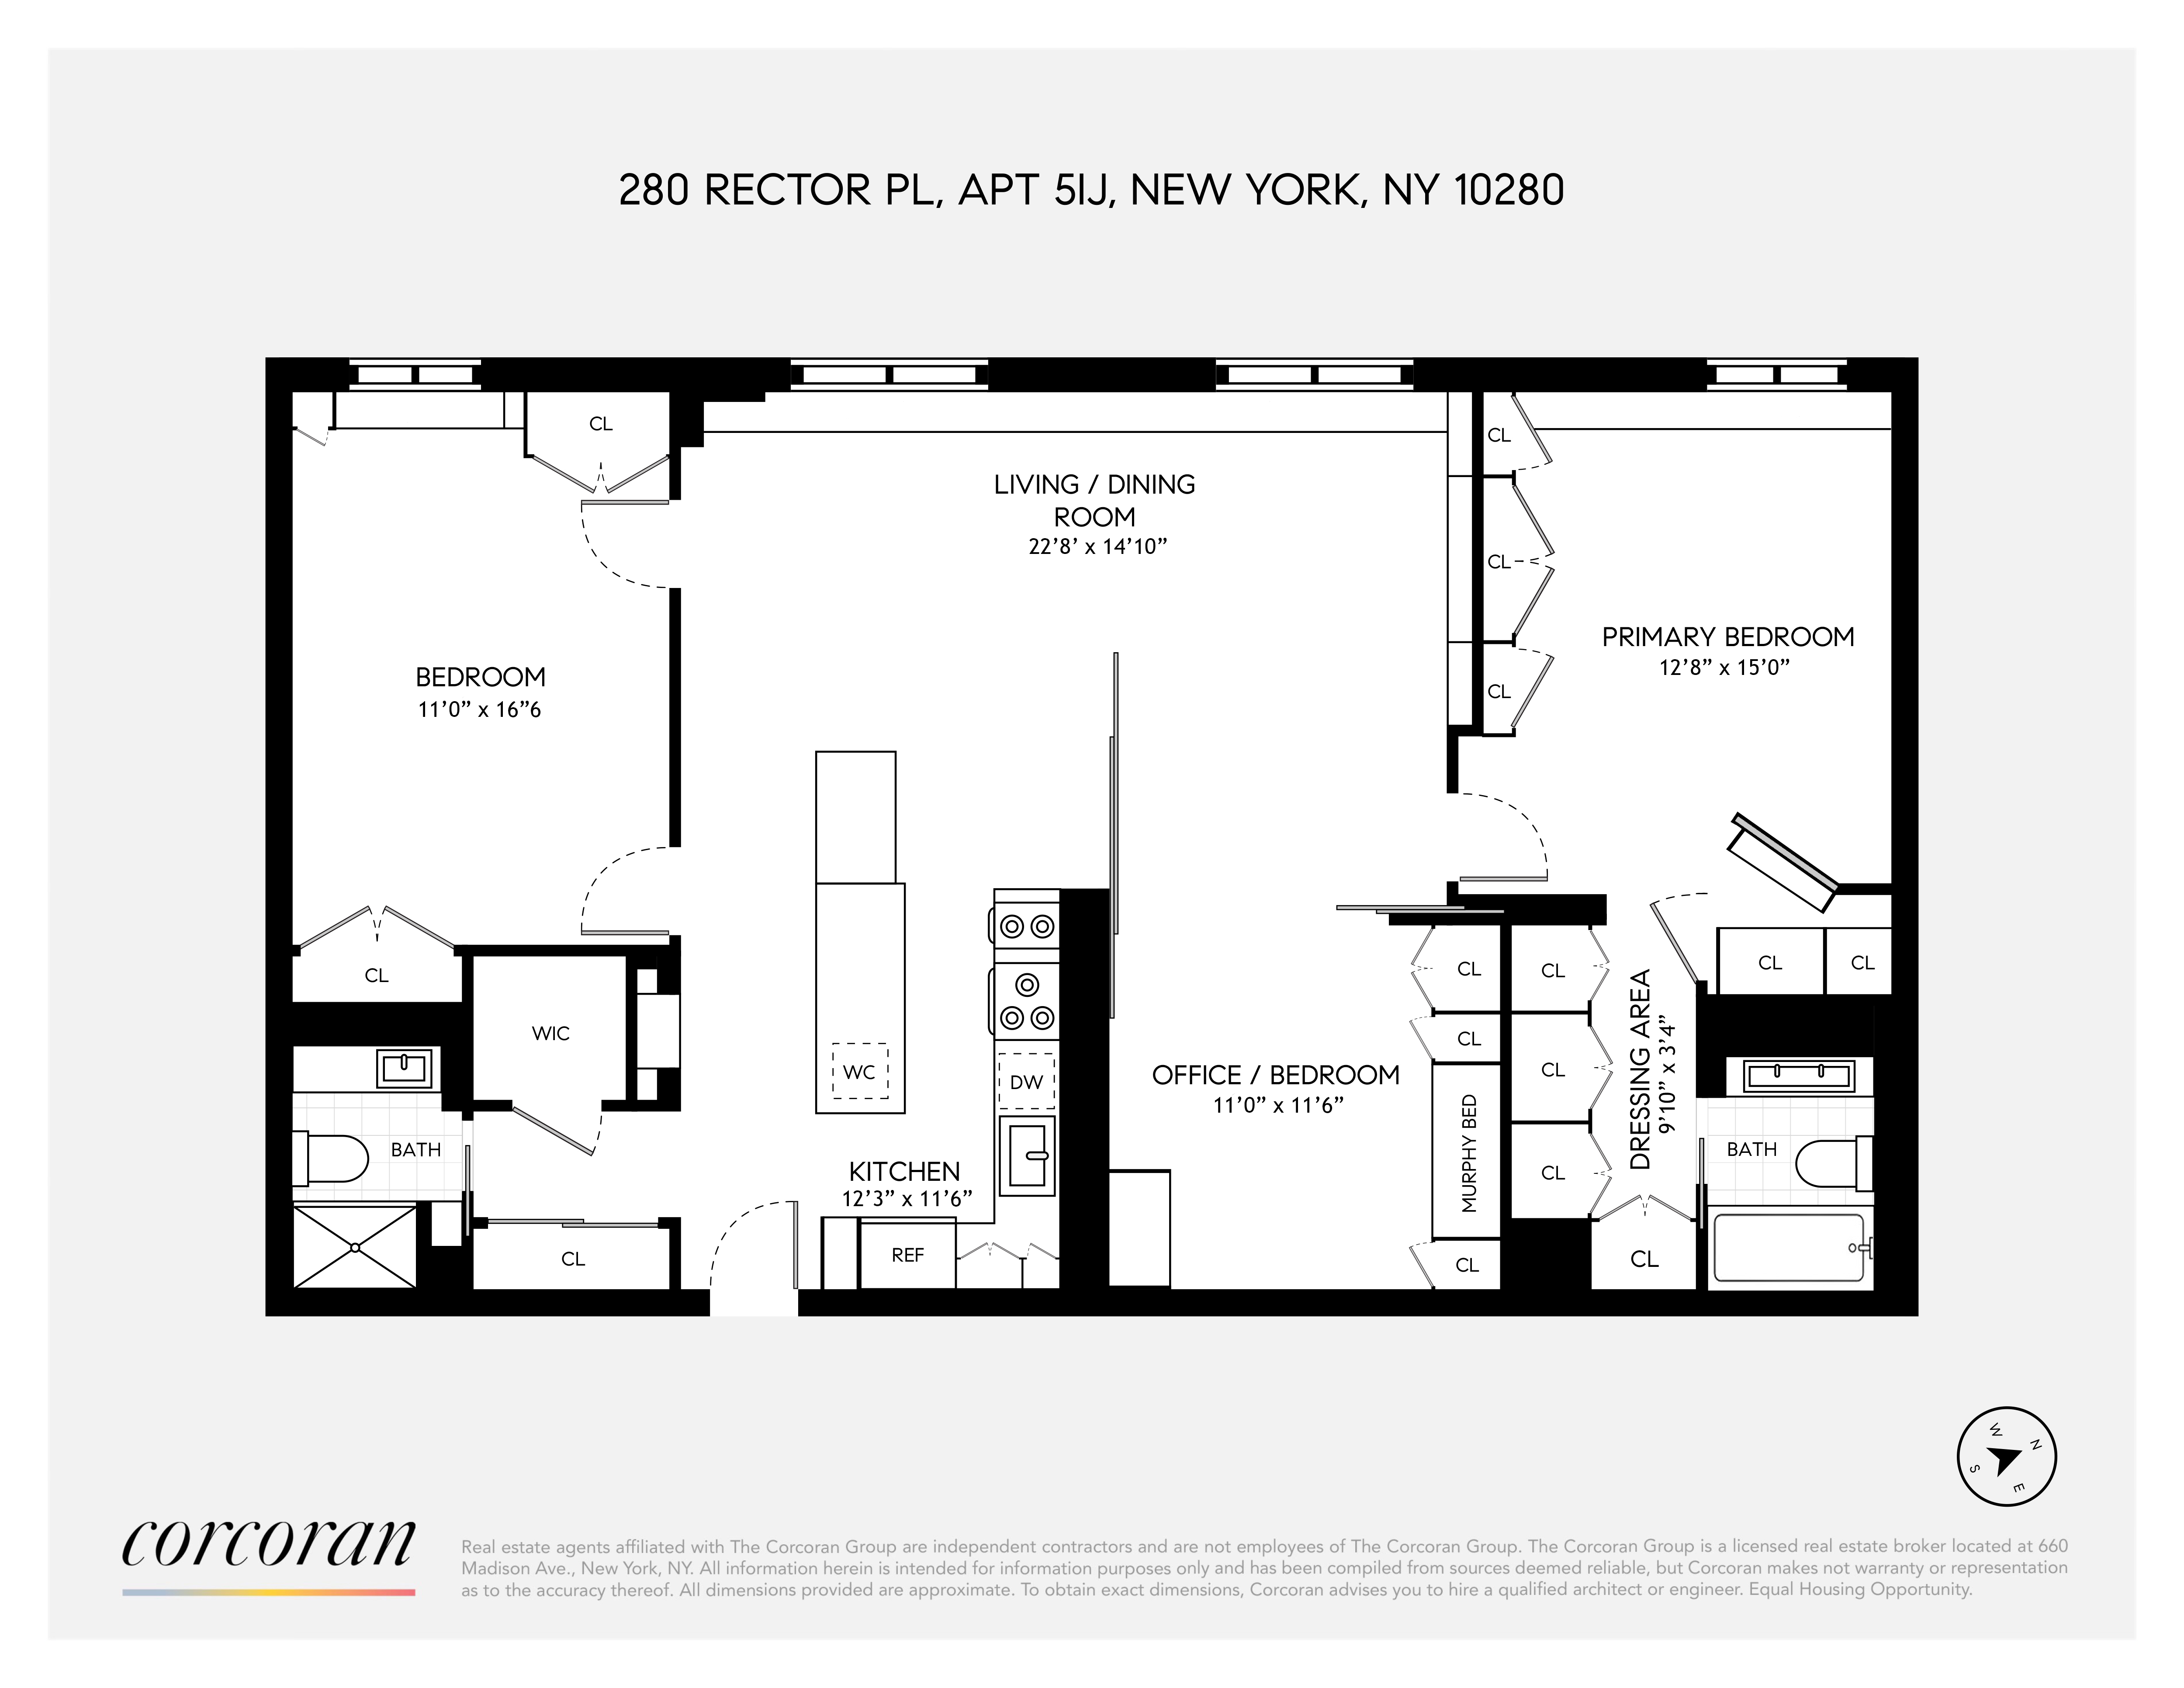 Floorplan for 280 Rector Place, 5IJ